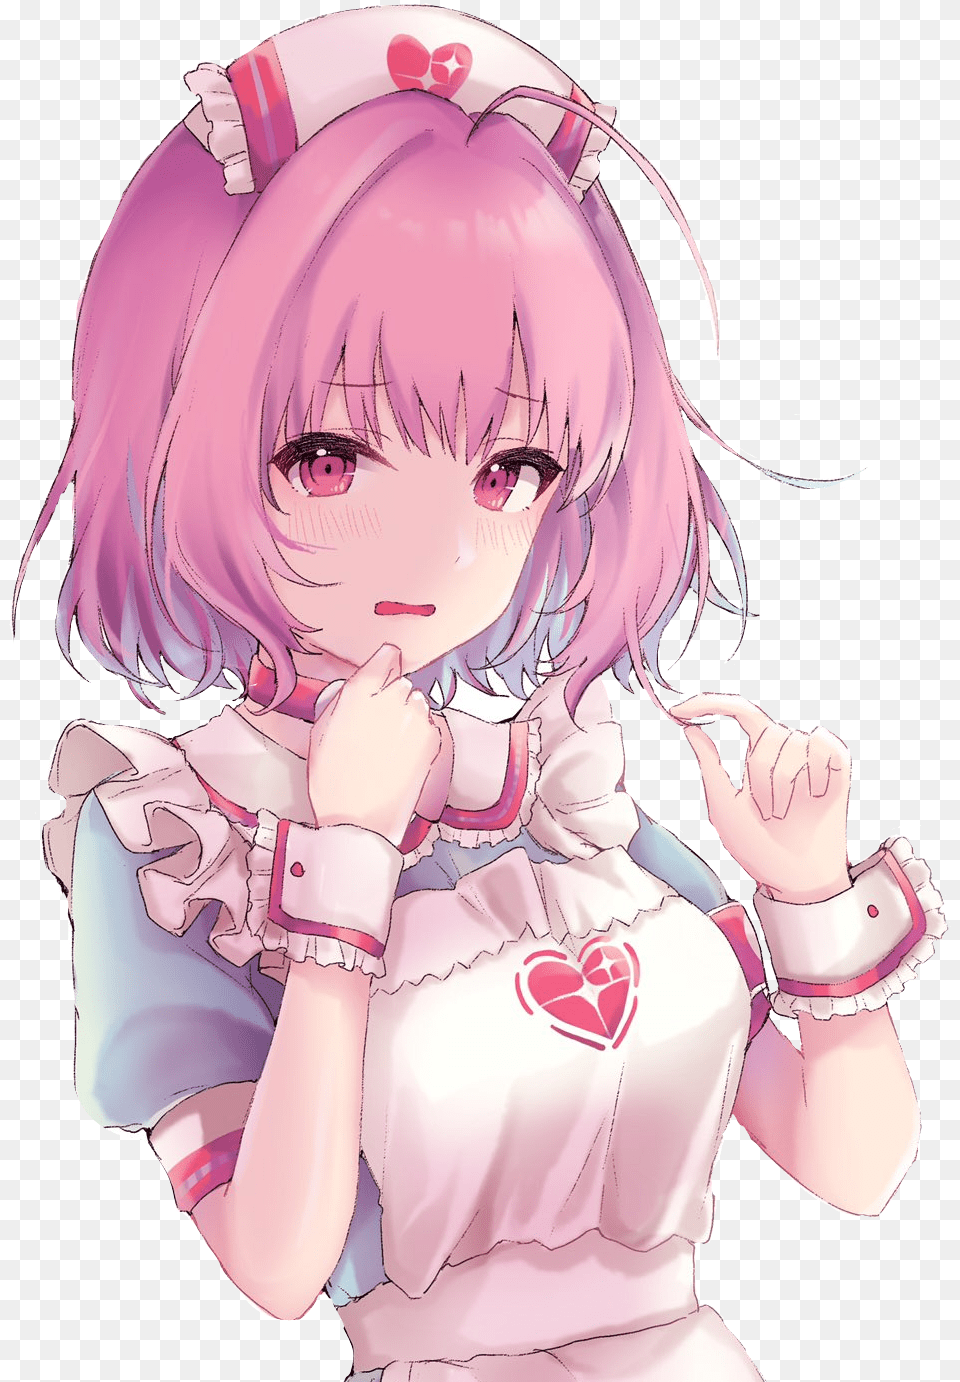 Nurse Anime Animegirl Animenurse Loveheart Pastel Pink Hair Nurse Anime Girl, Book, Comics, Publication, Baby Free Transparent Png